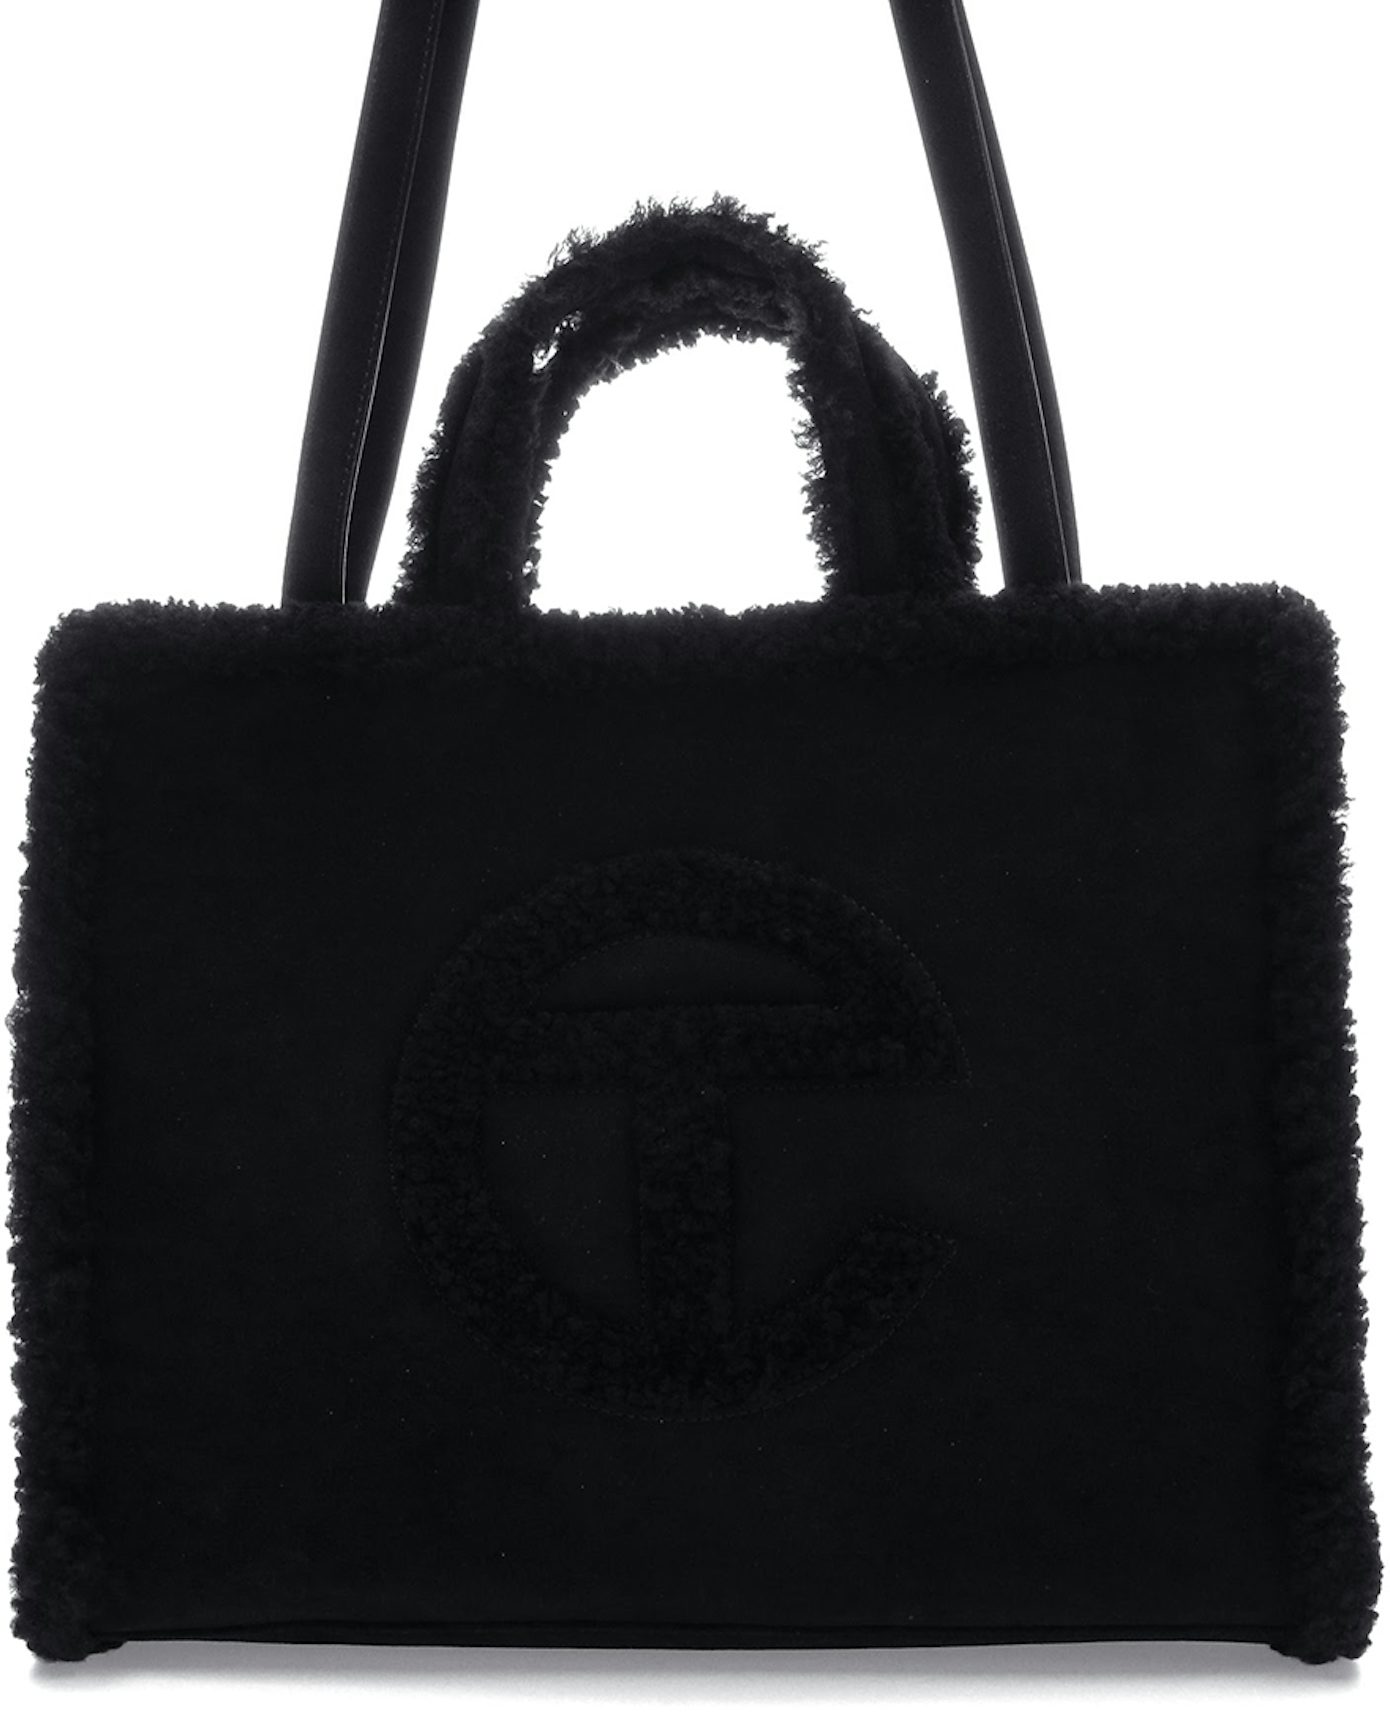 UGG x Telfar Shopping Bag Medium Black - BRAND NEW WITH TAGS